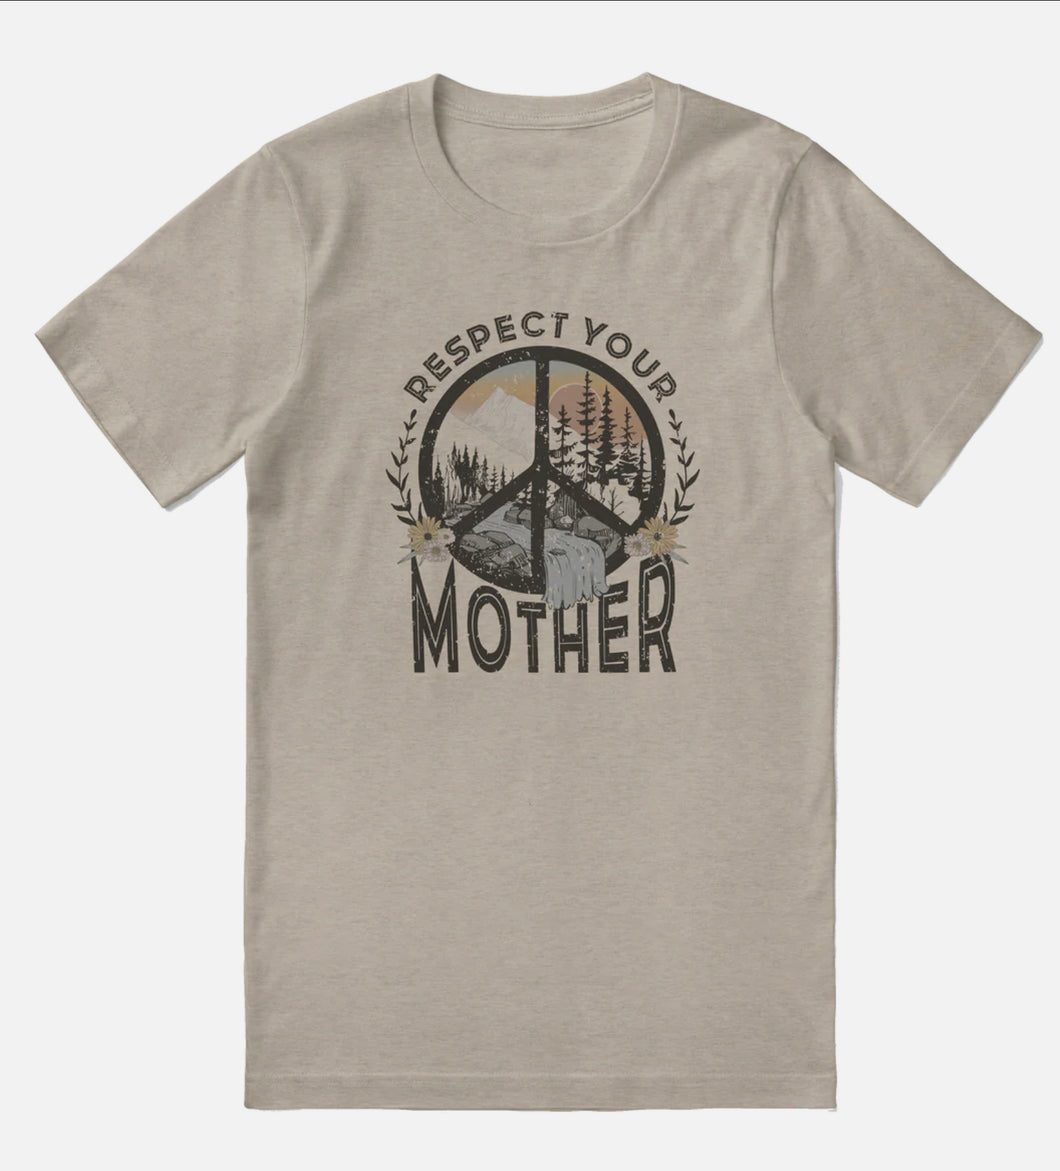 XXL Respect your mother tee shirt